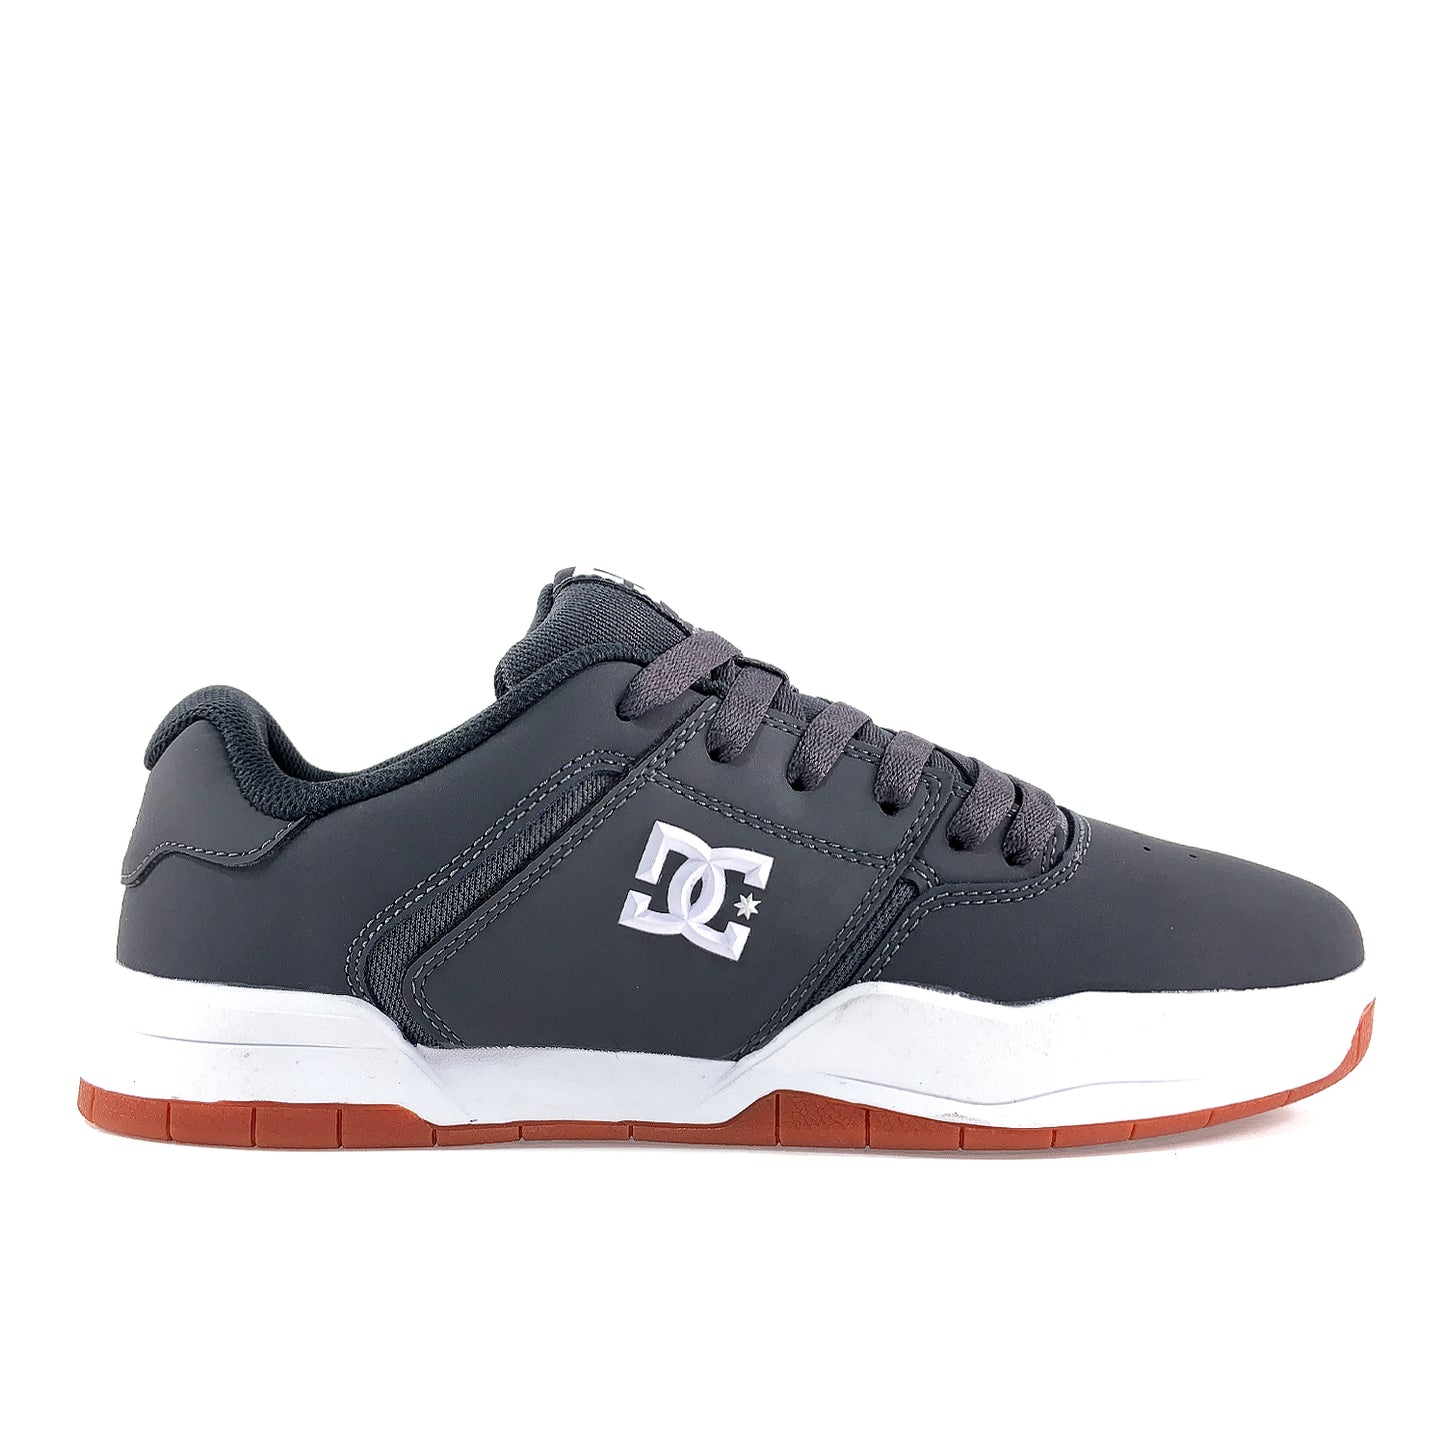 DC Central Shoes - Grey / White / Gum - Prime Delux Store